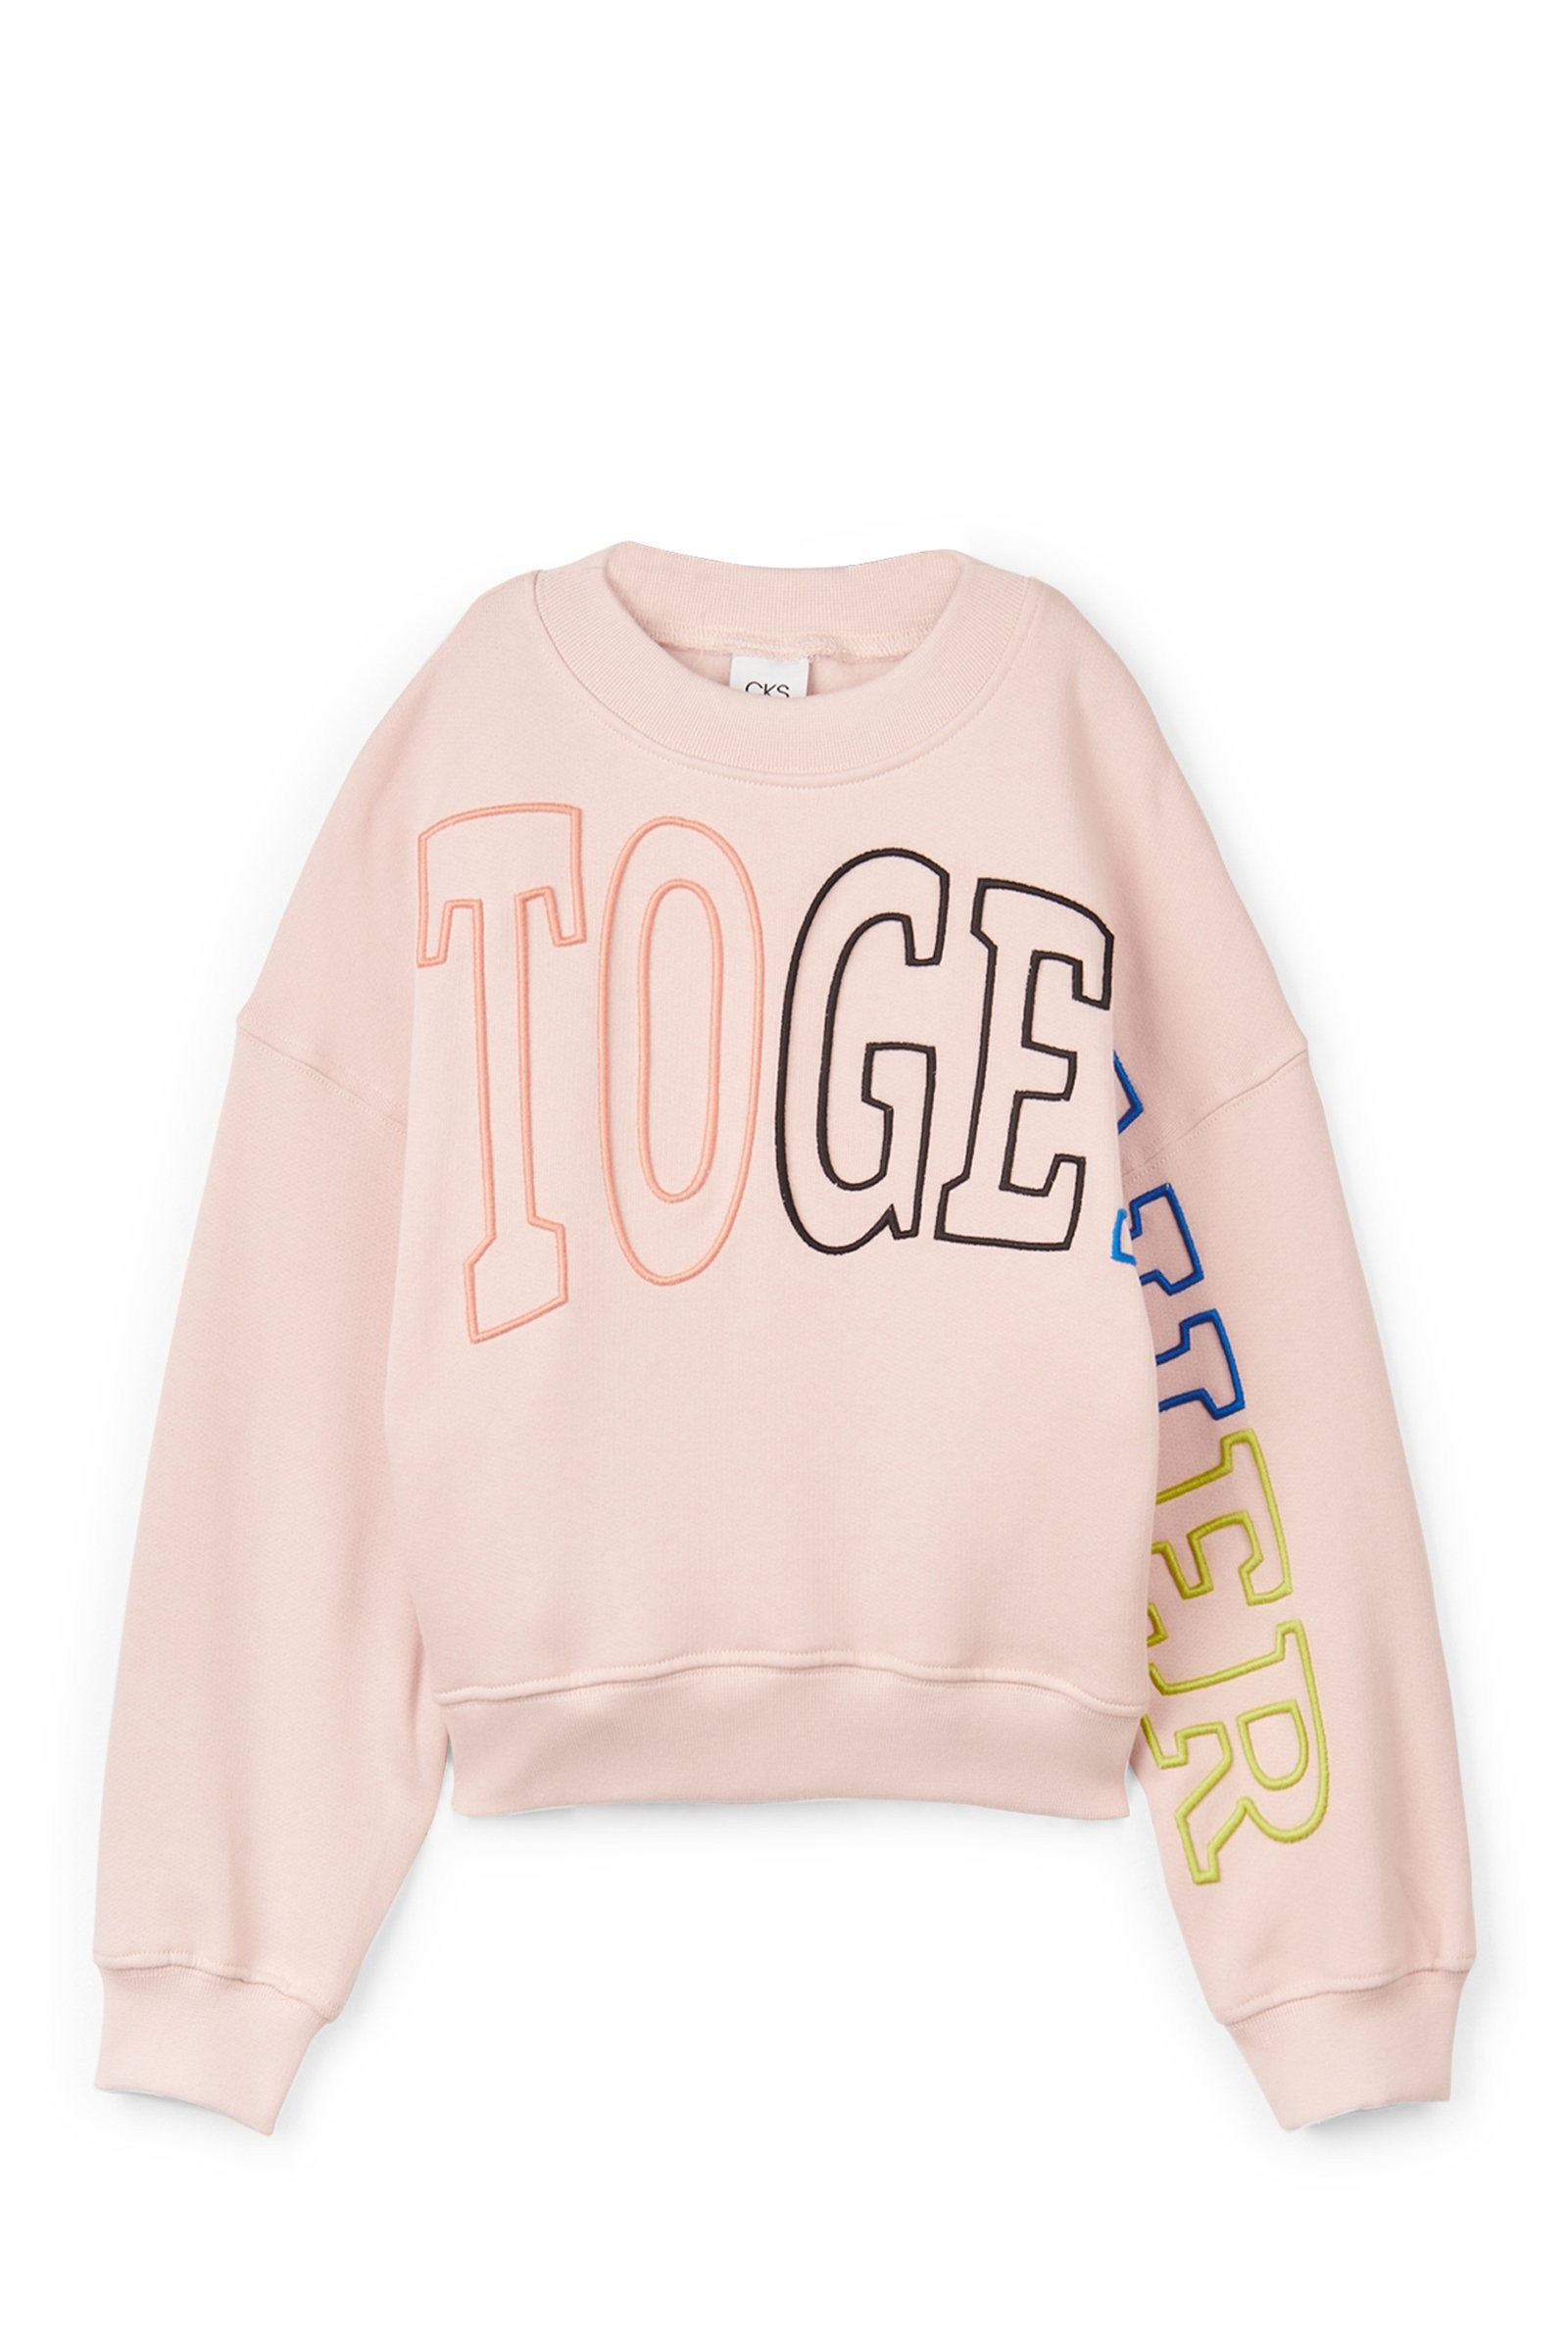 CKS Kids - CELSEY - sweater - light pink